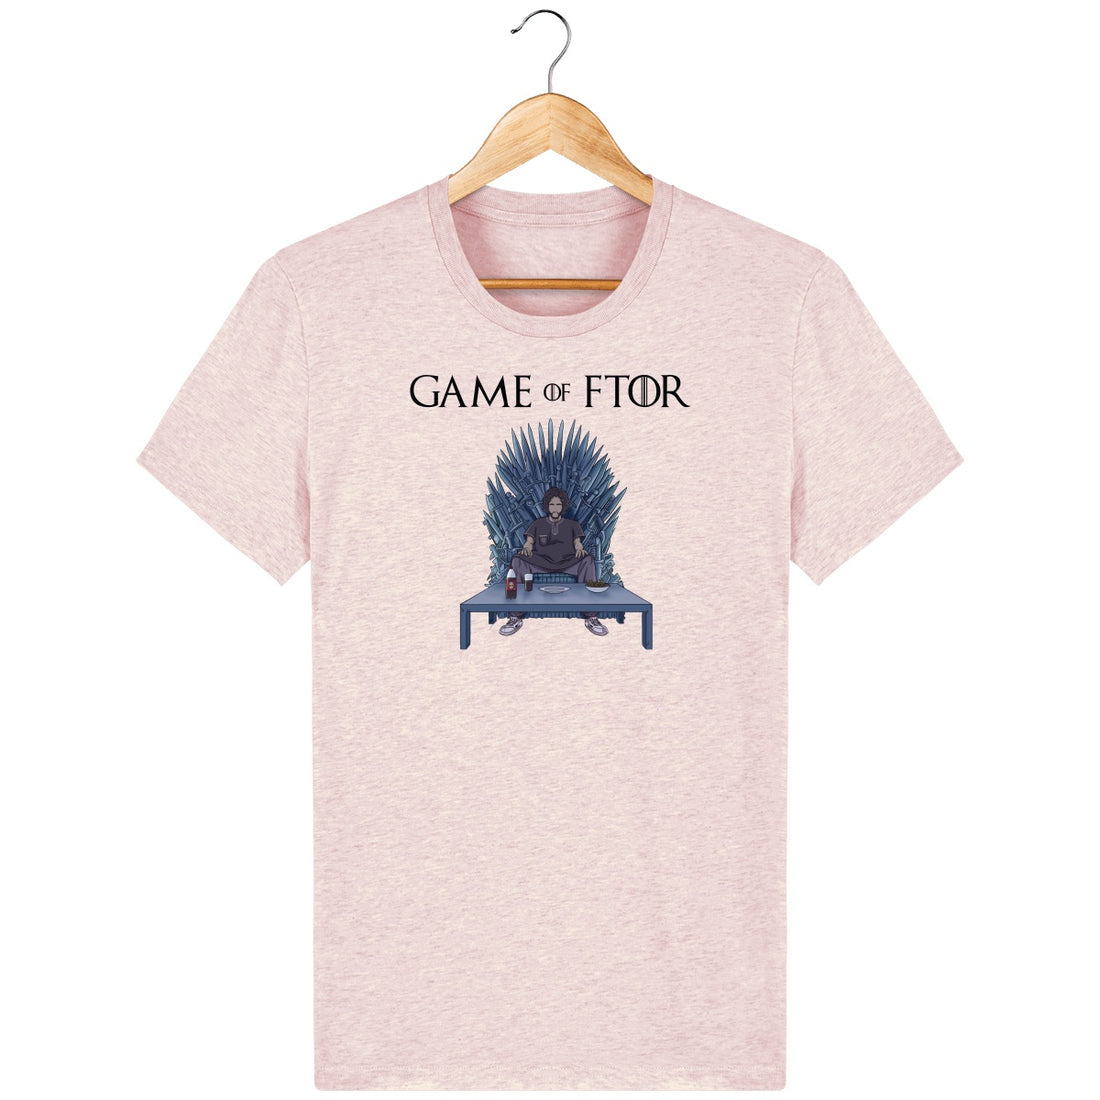 tshirt game of ftor